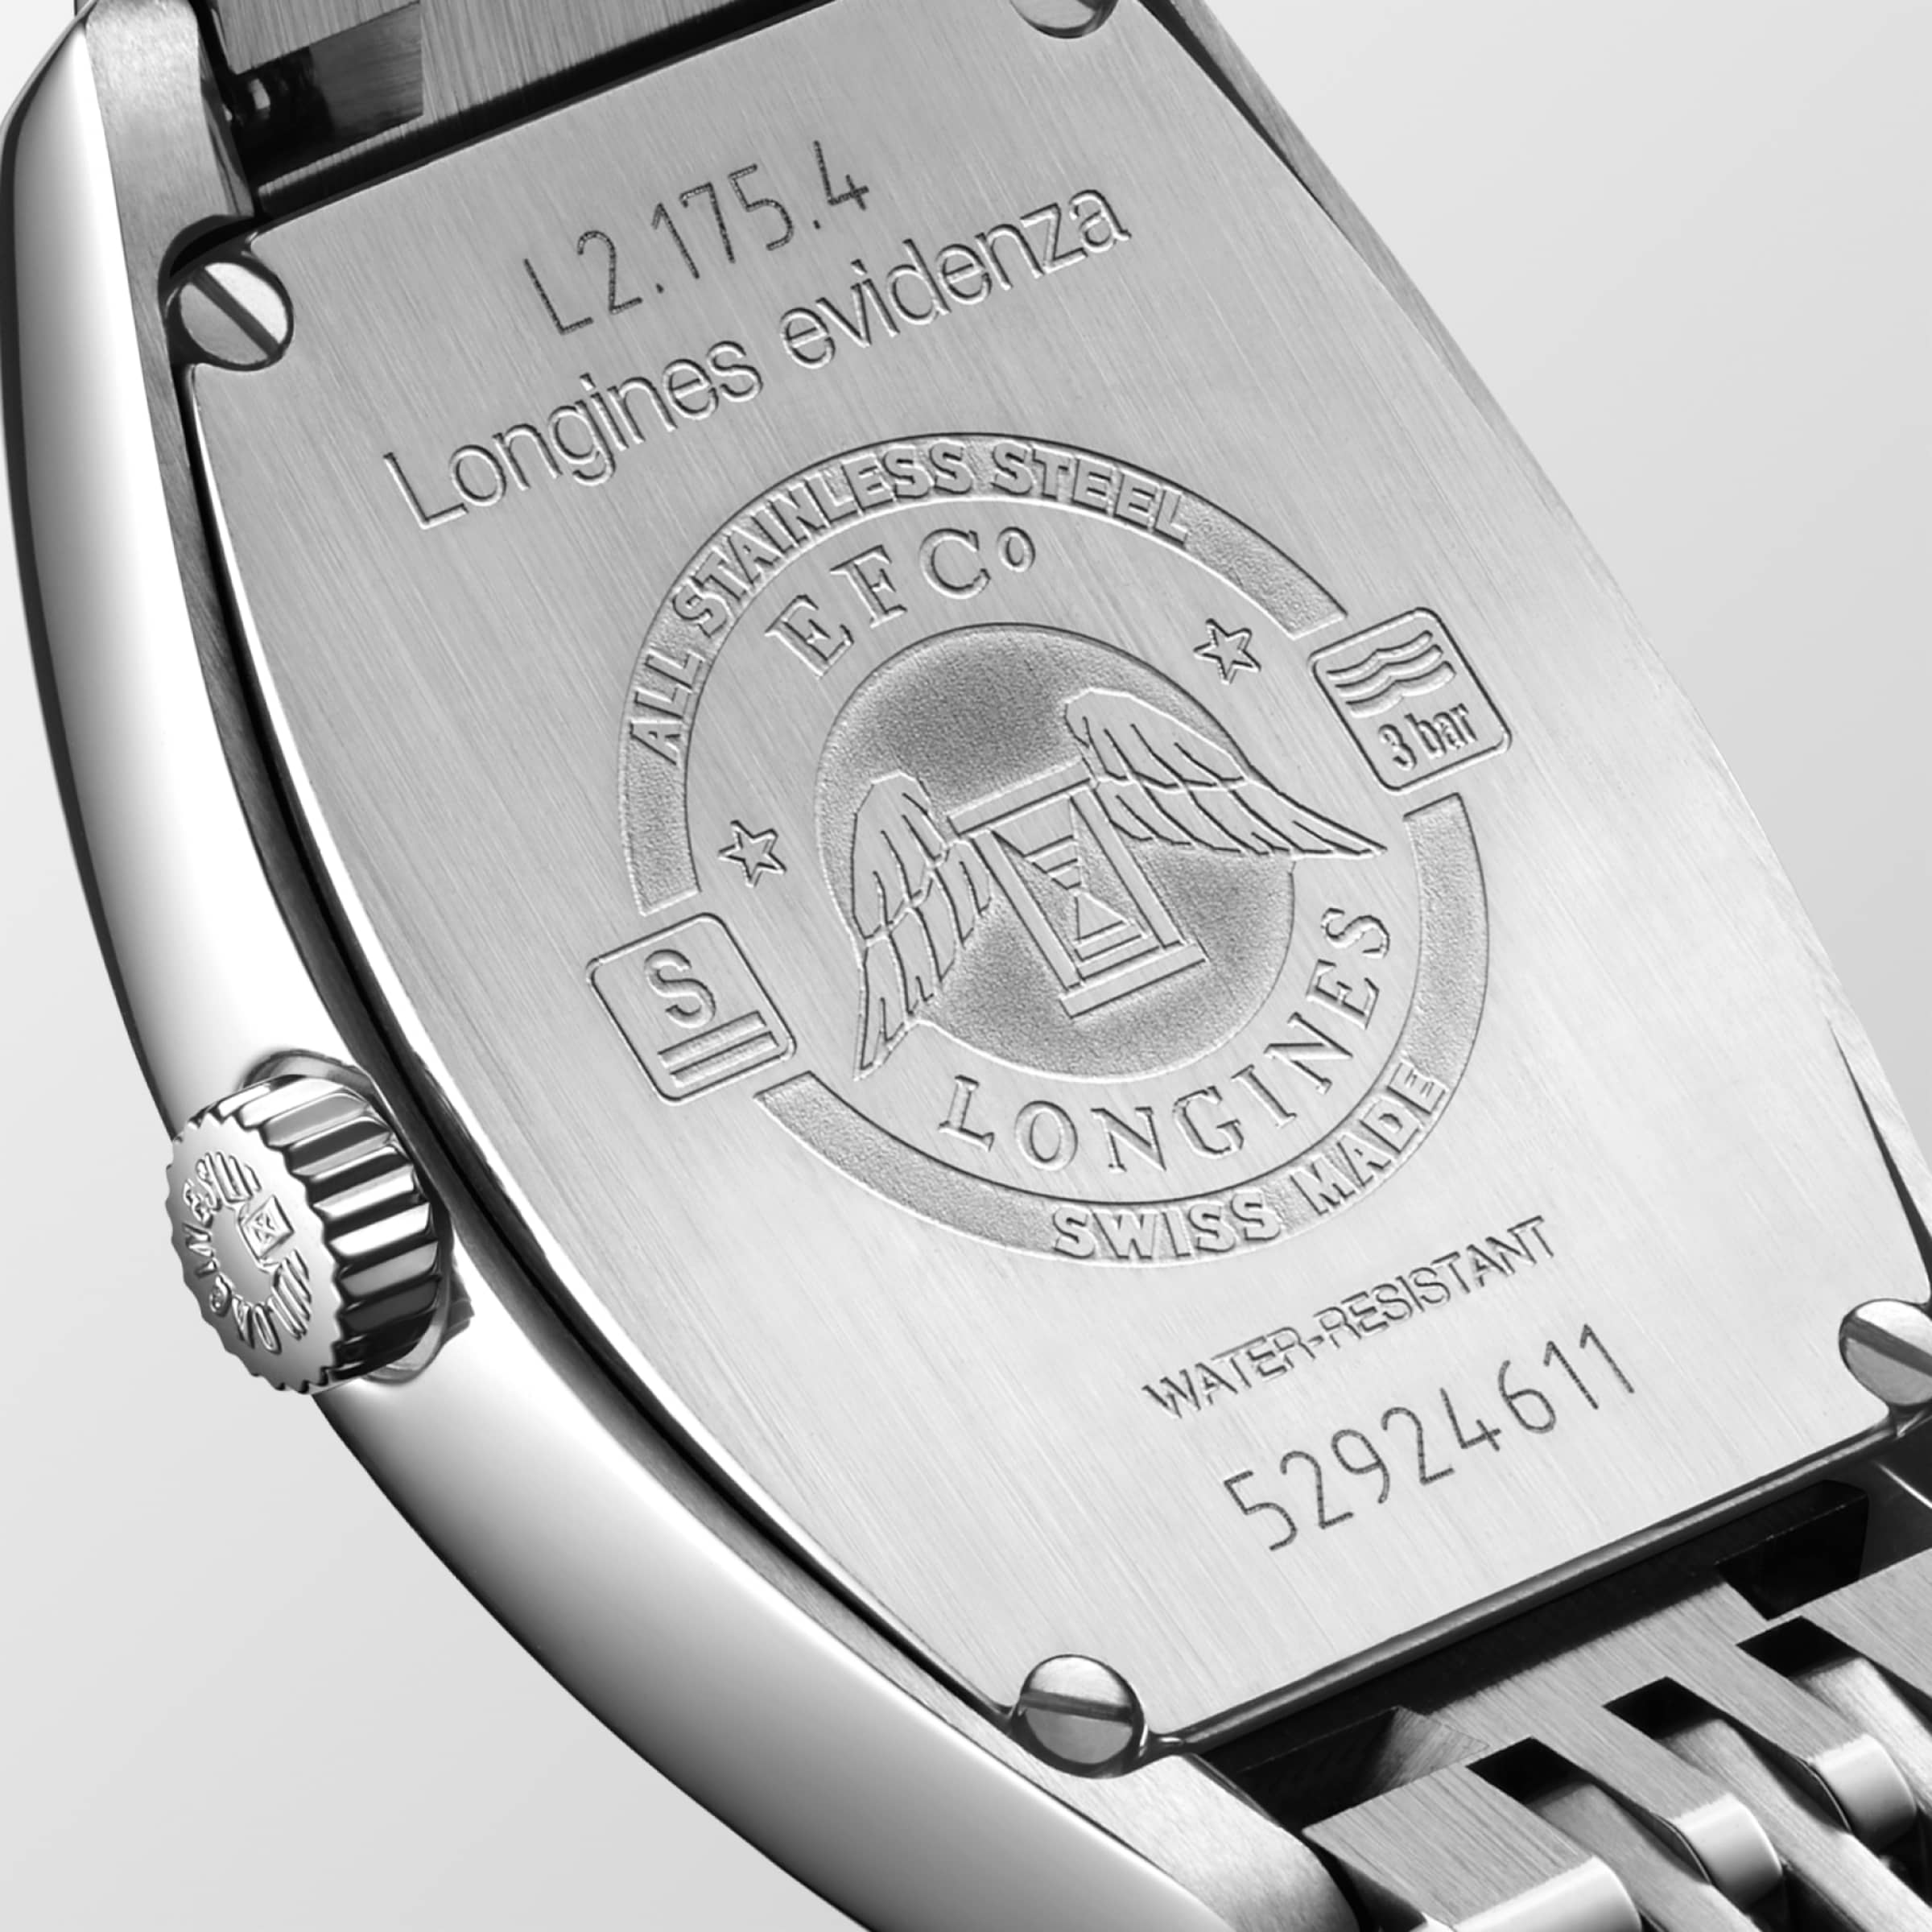 Longines EVIDENZA Quartz Stainless steel Watch - L2.175.4.71.6